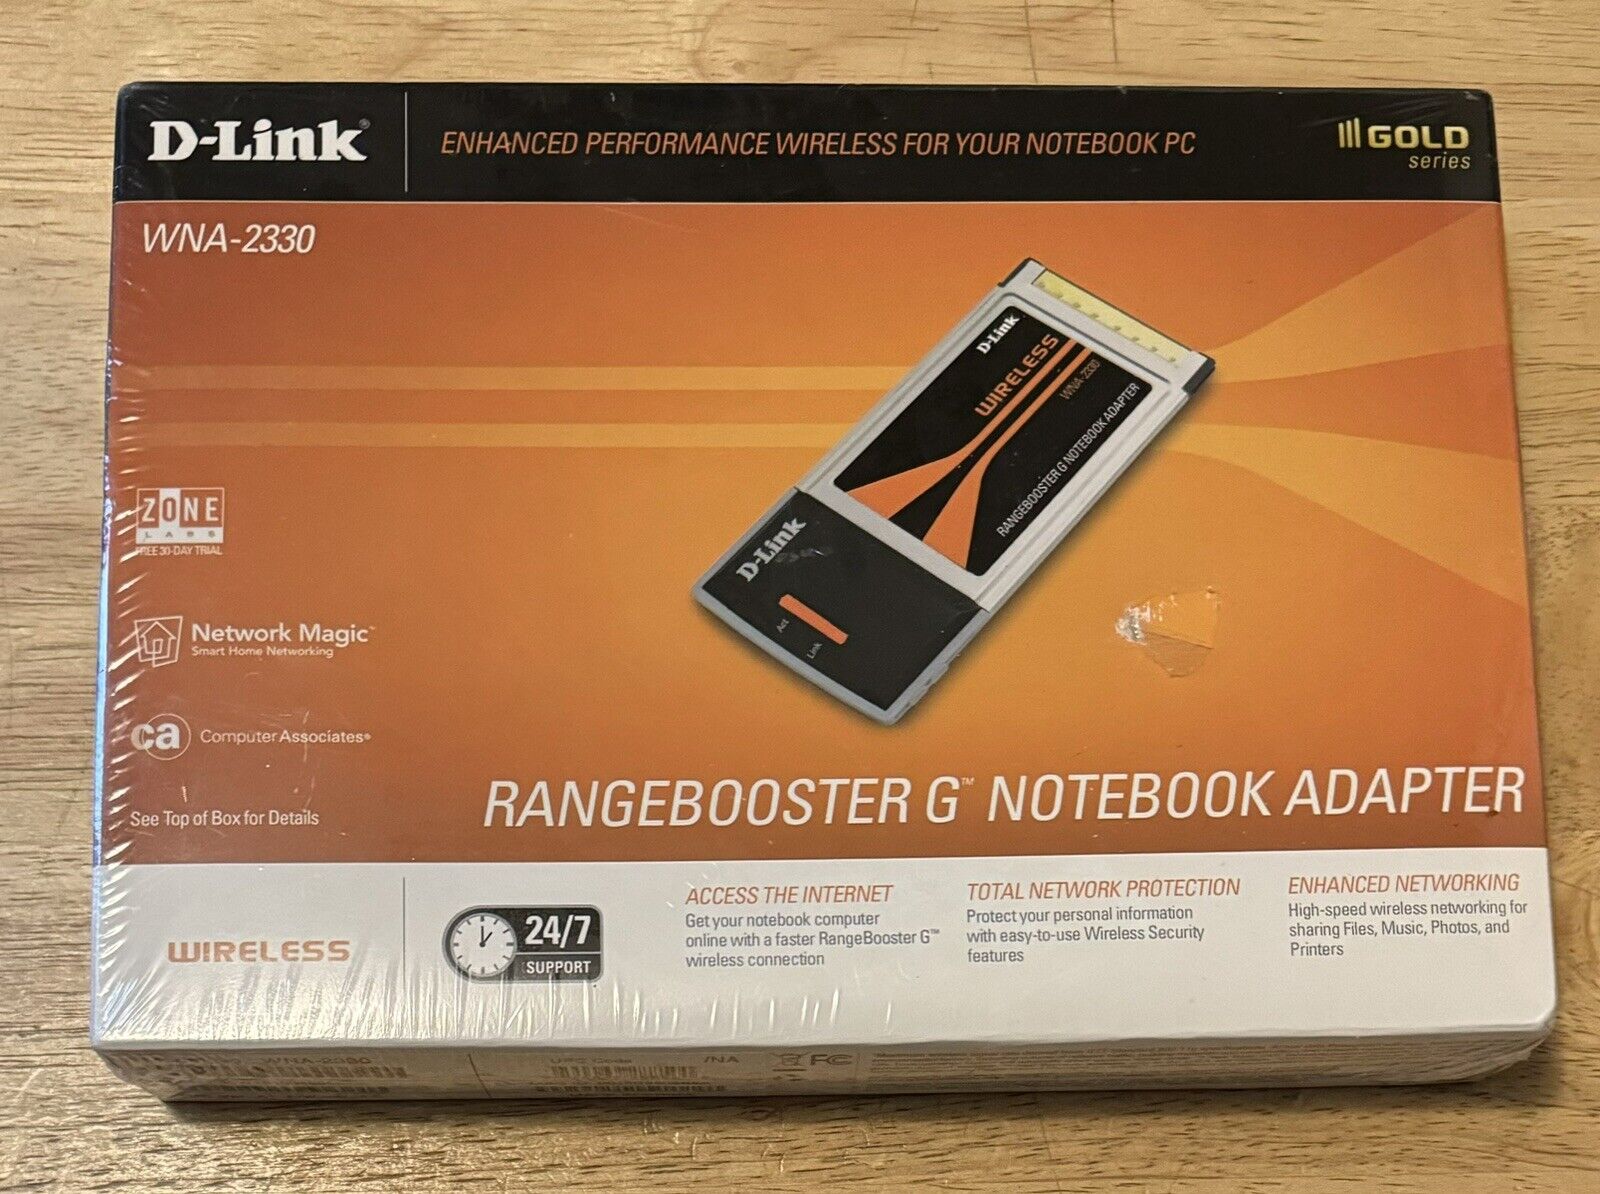 D-Link RangeBooster G Notebook Adapter WNA-2330 CardBus - New & Sealed